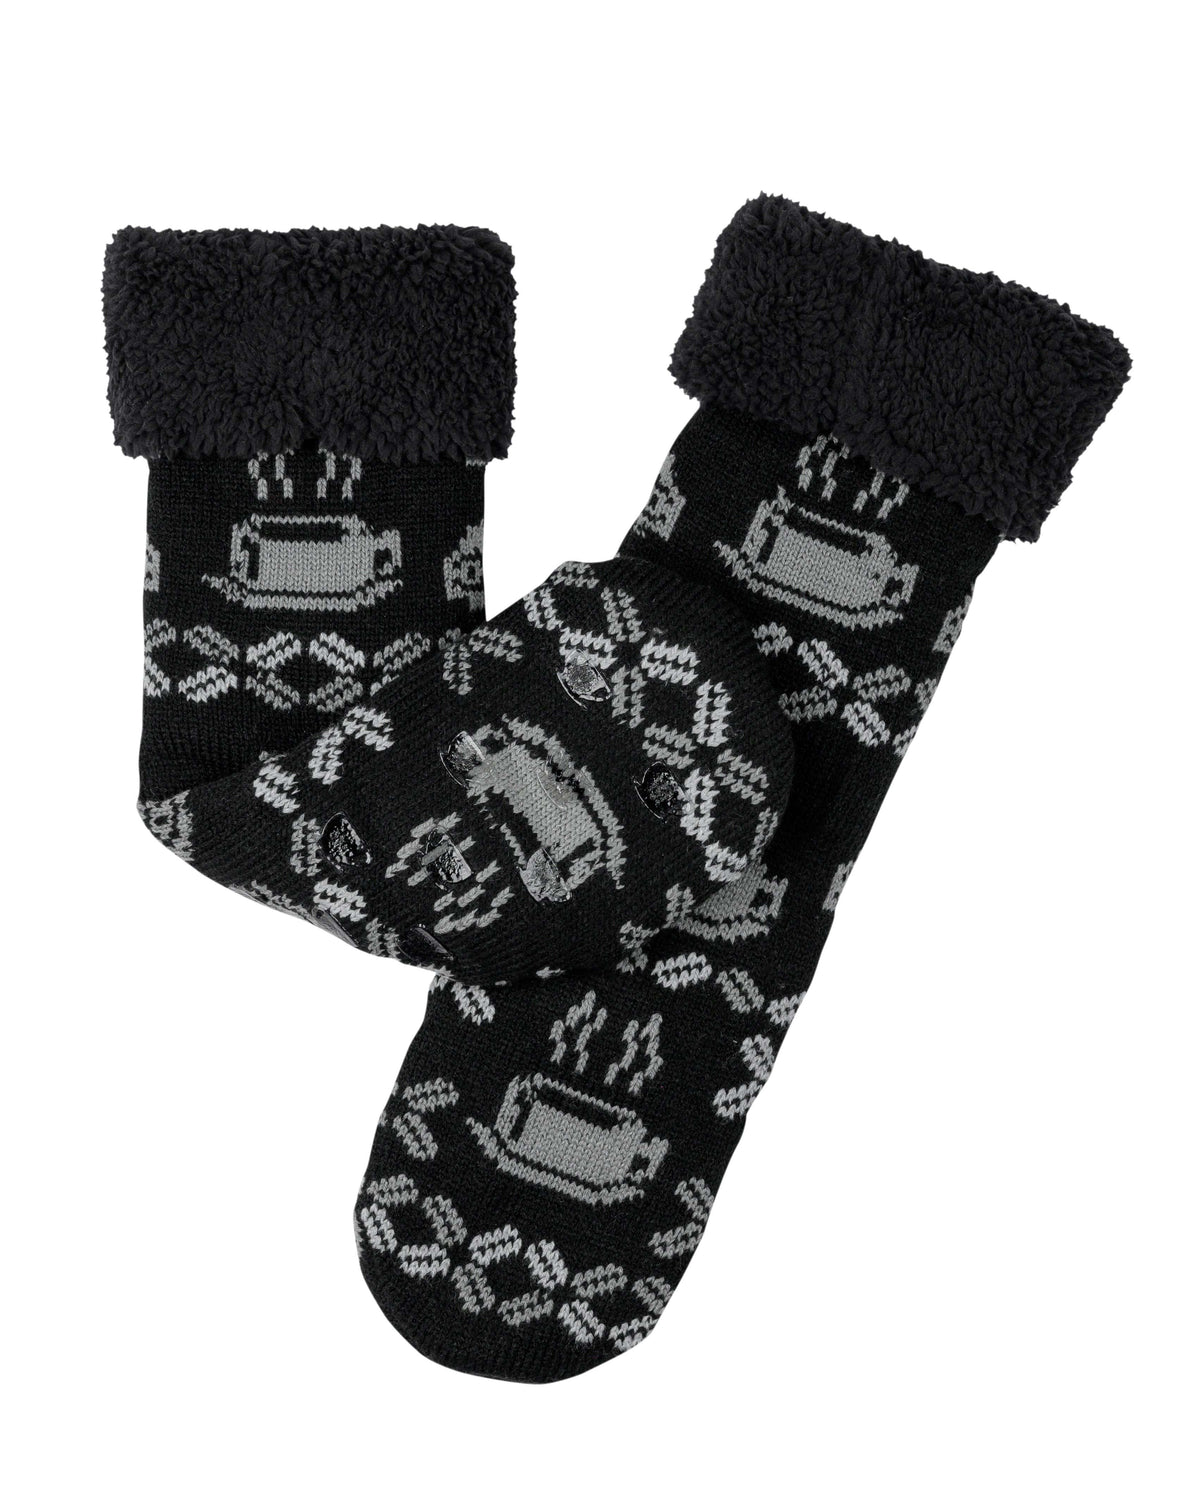 Coffee Cup Lounge Socks - Black - LATTELOVE Co.